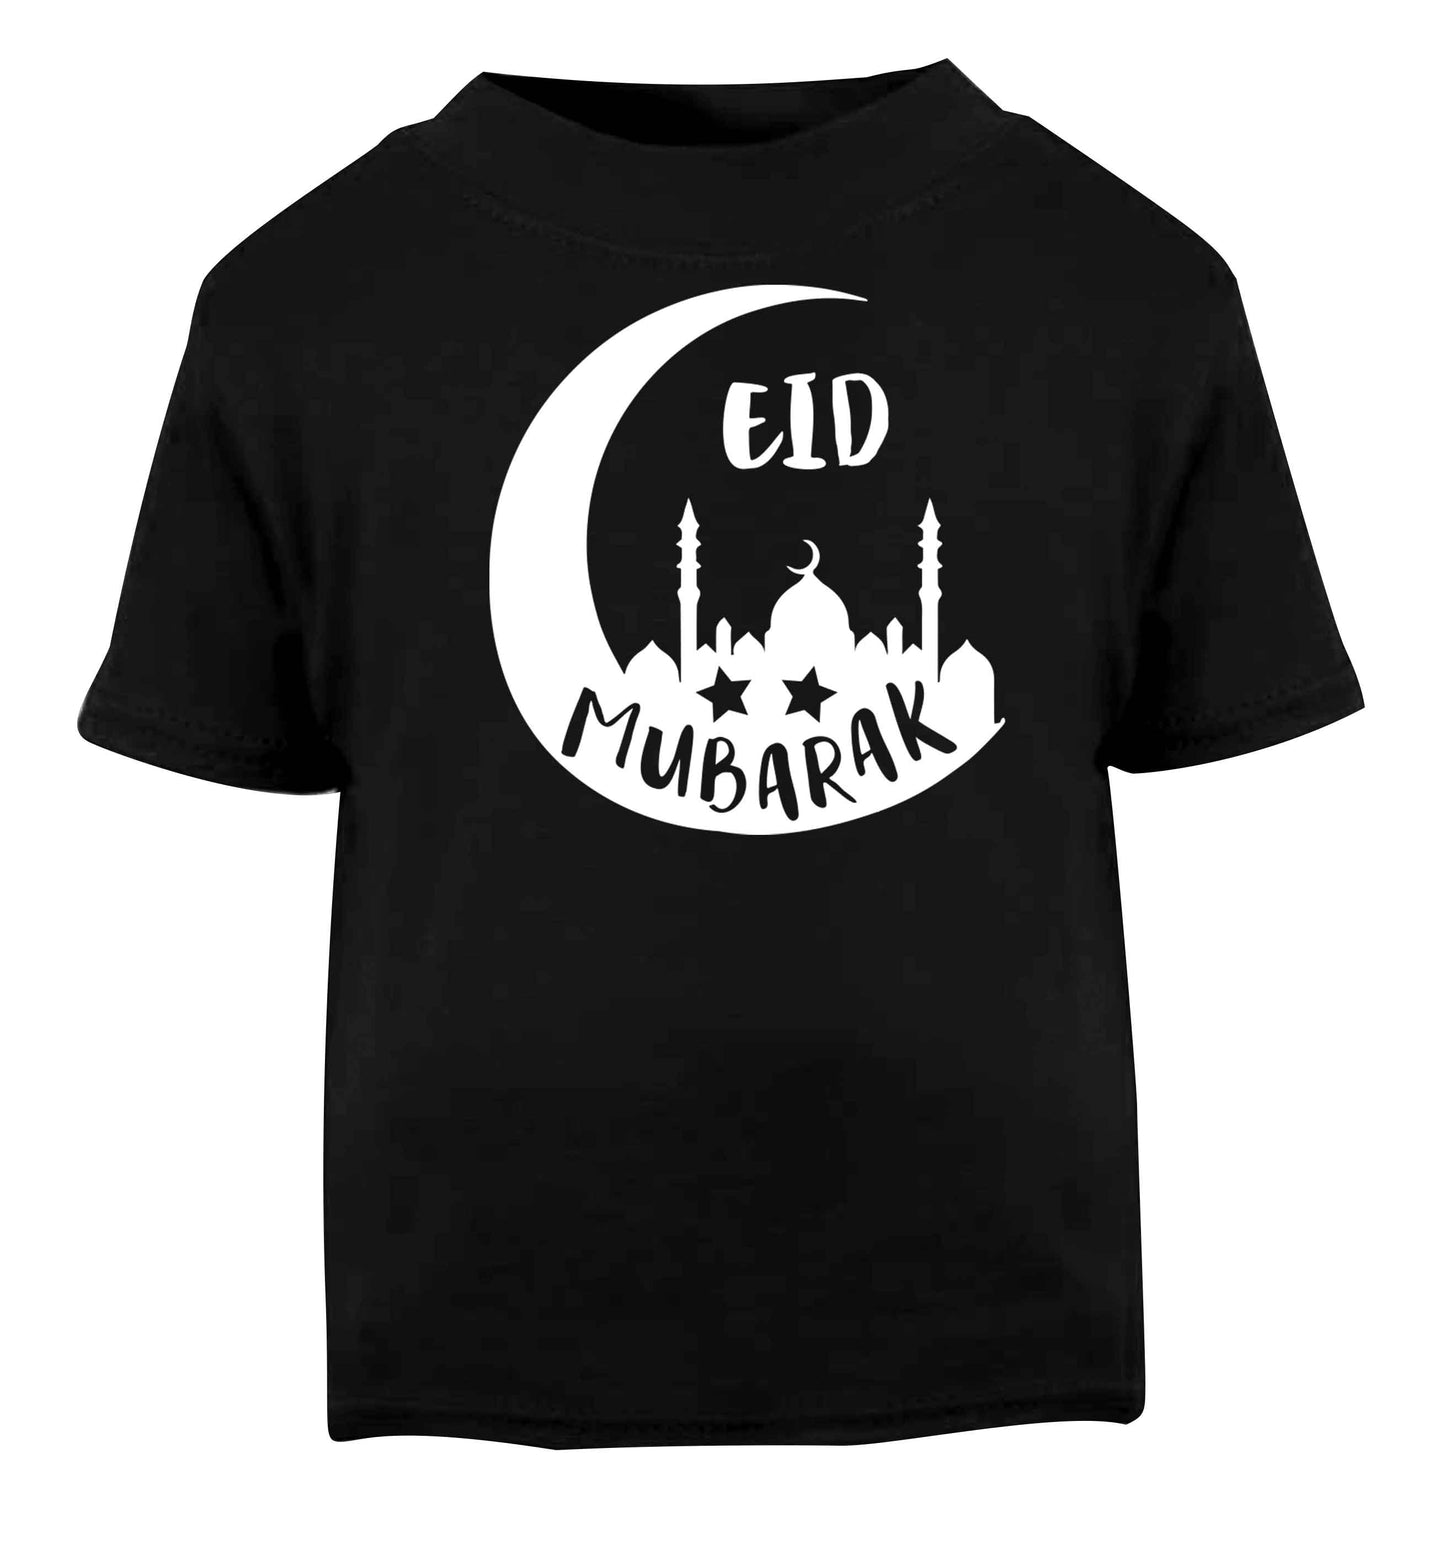 Eid mubarak Black baby toddler Tshirt 2 years